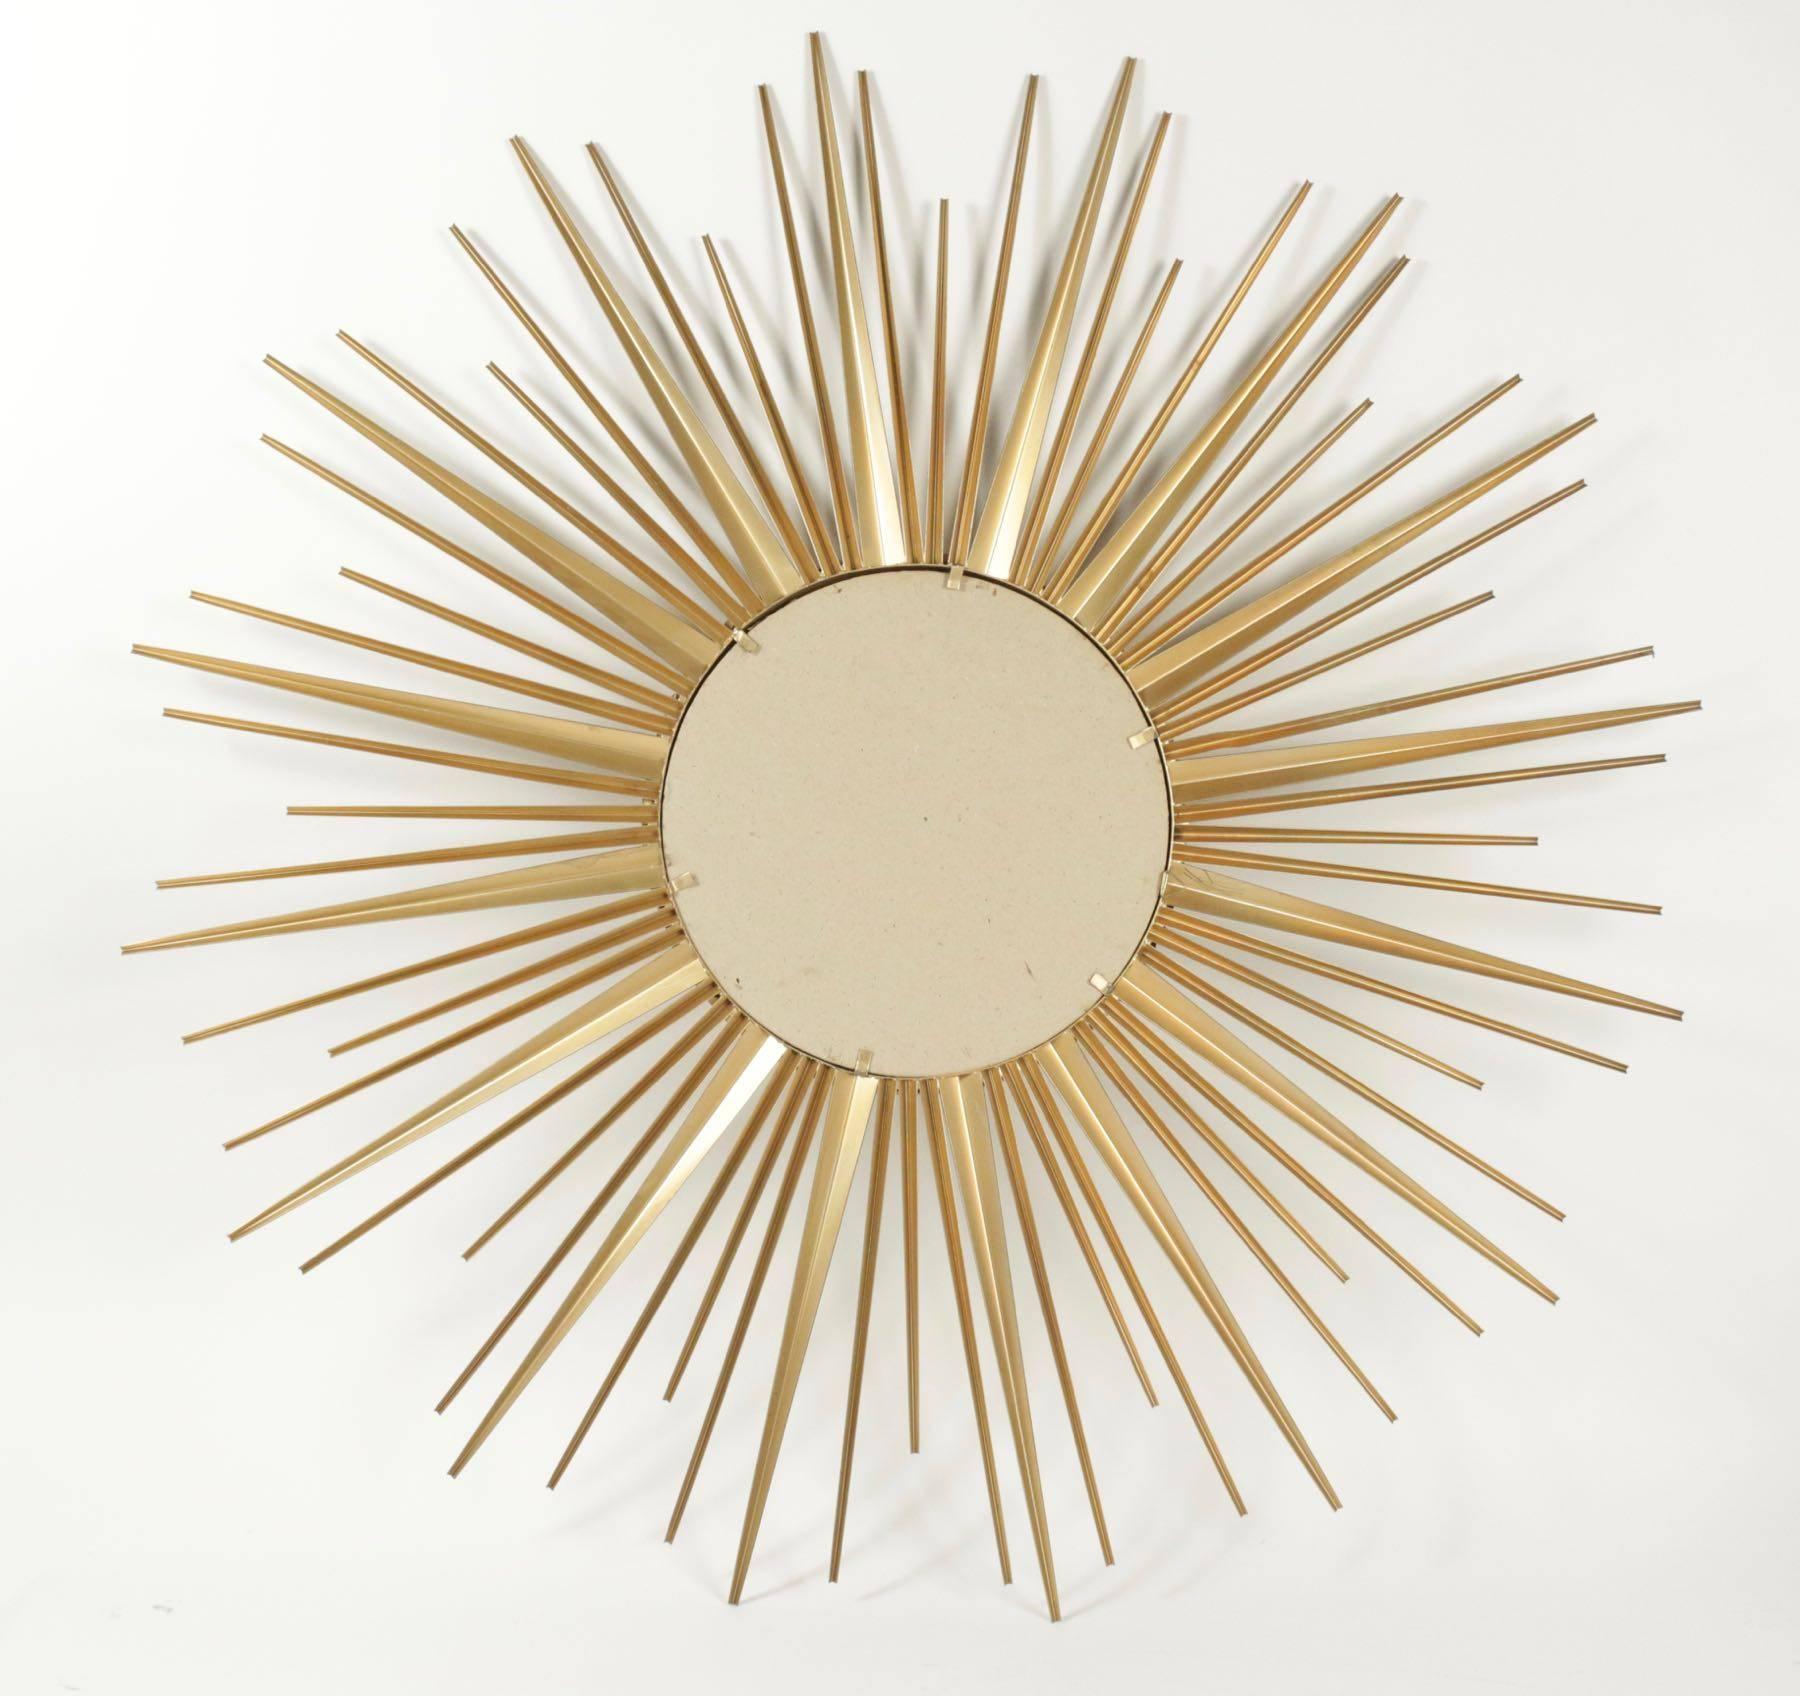 European Sunburst Convex Mirror from 1980